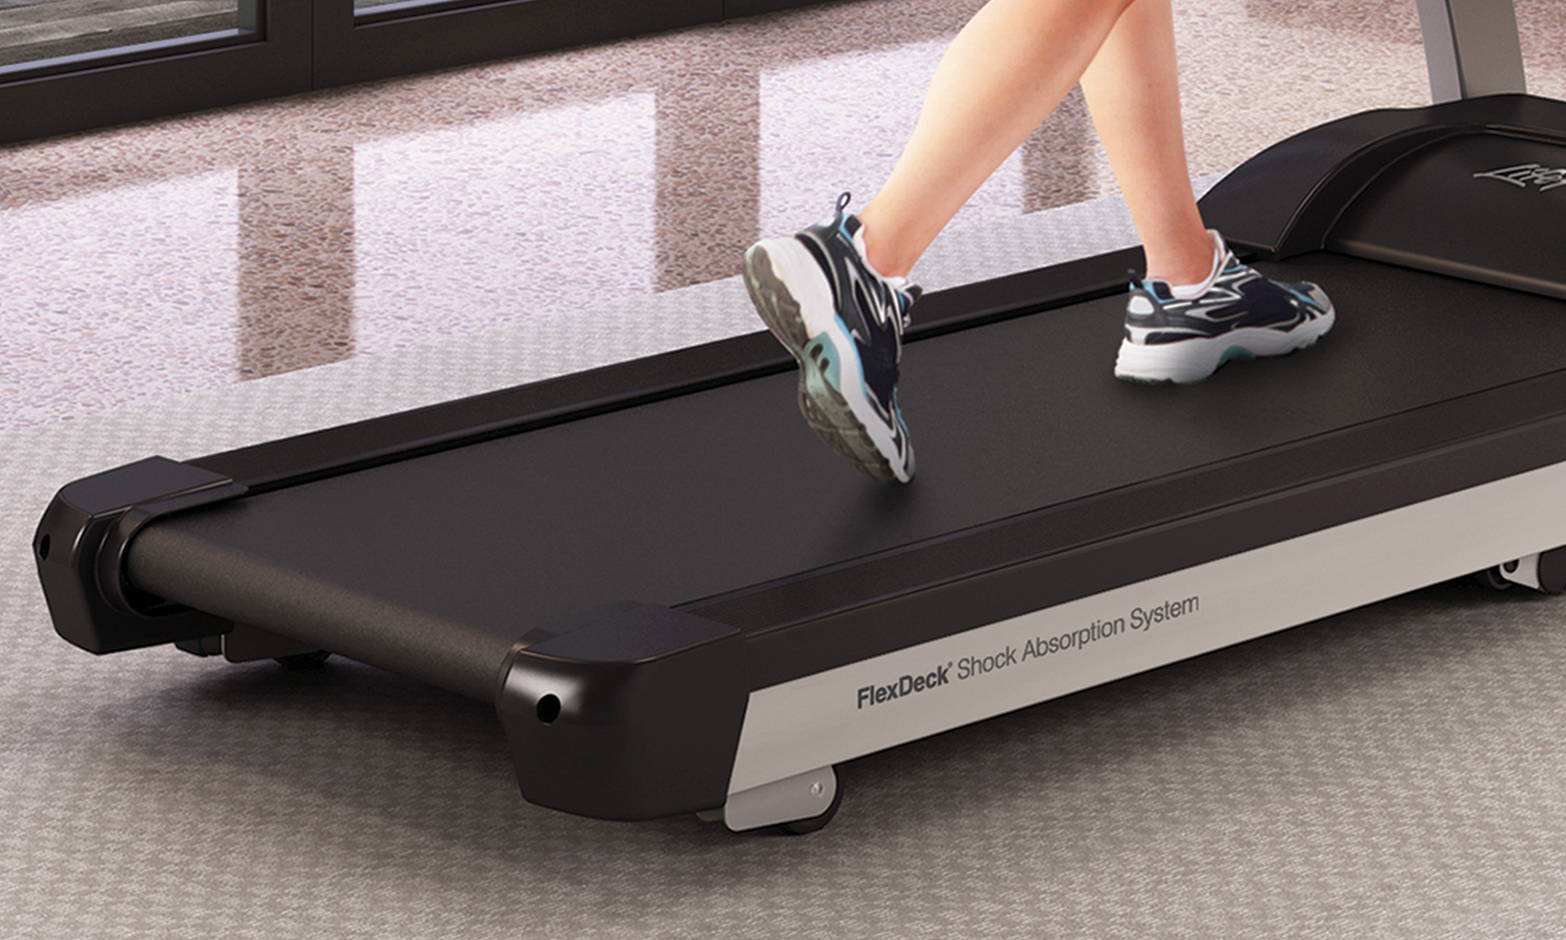 FlexDeck Shock Absorption System on Life Fitness Treadmill